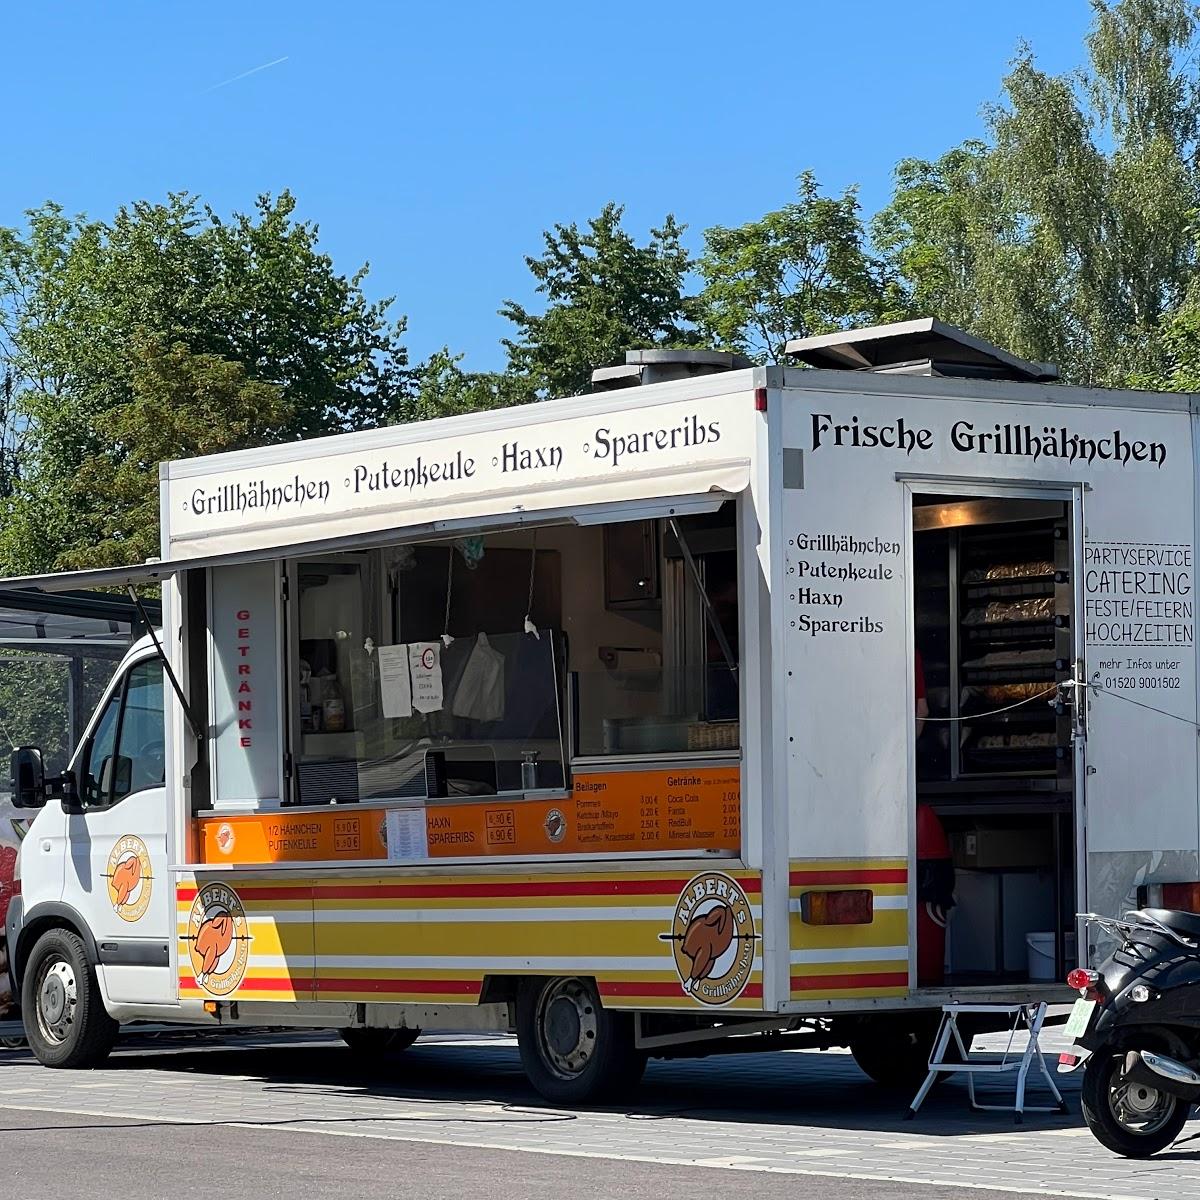 Restaurant "Albert‘s Grillhähnchen" in Wittislingen